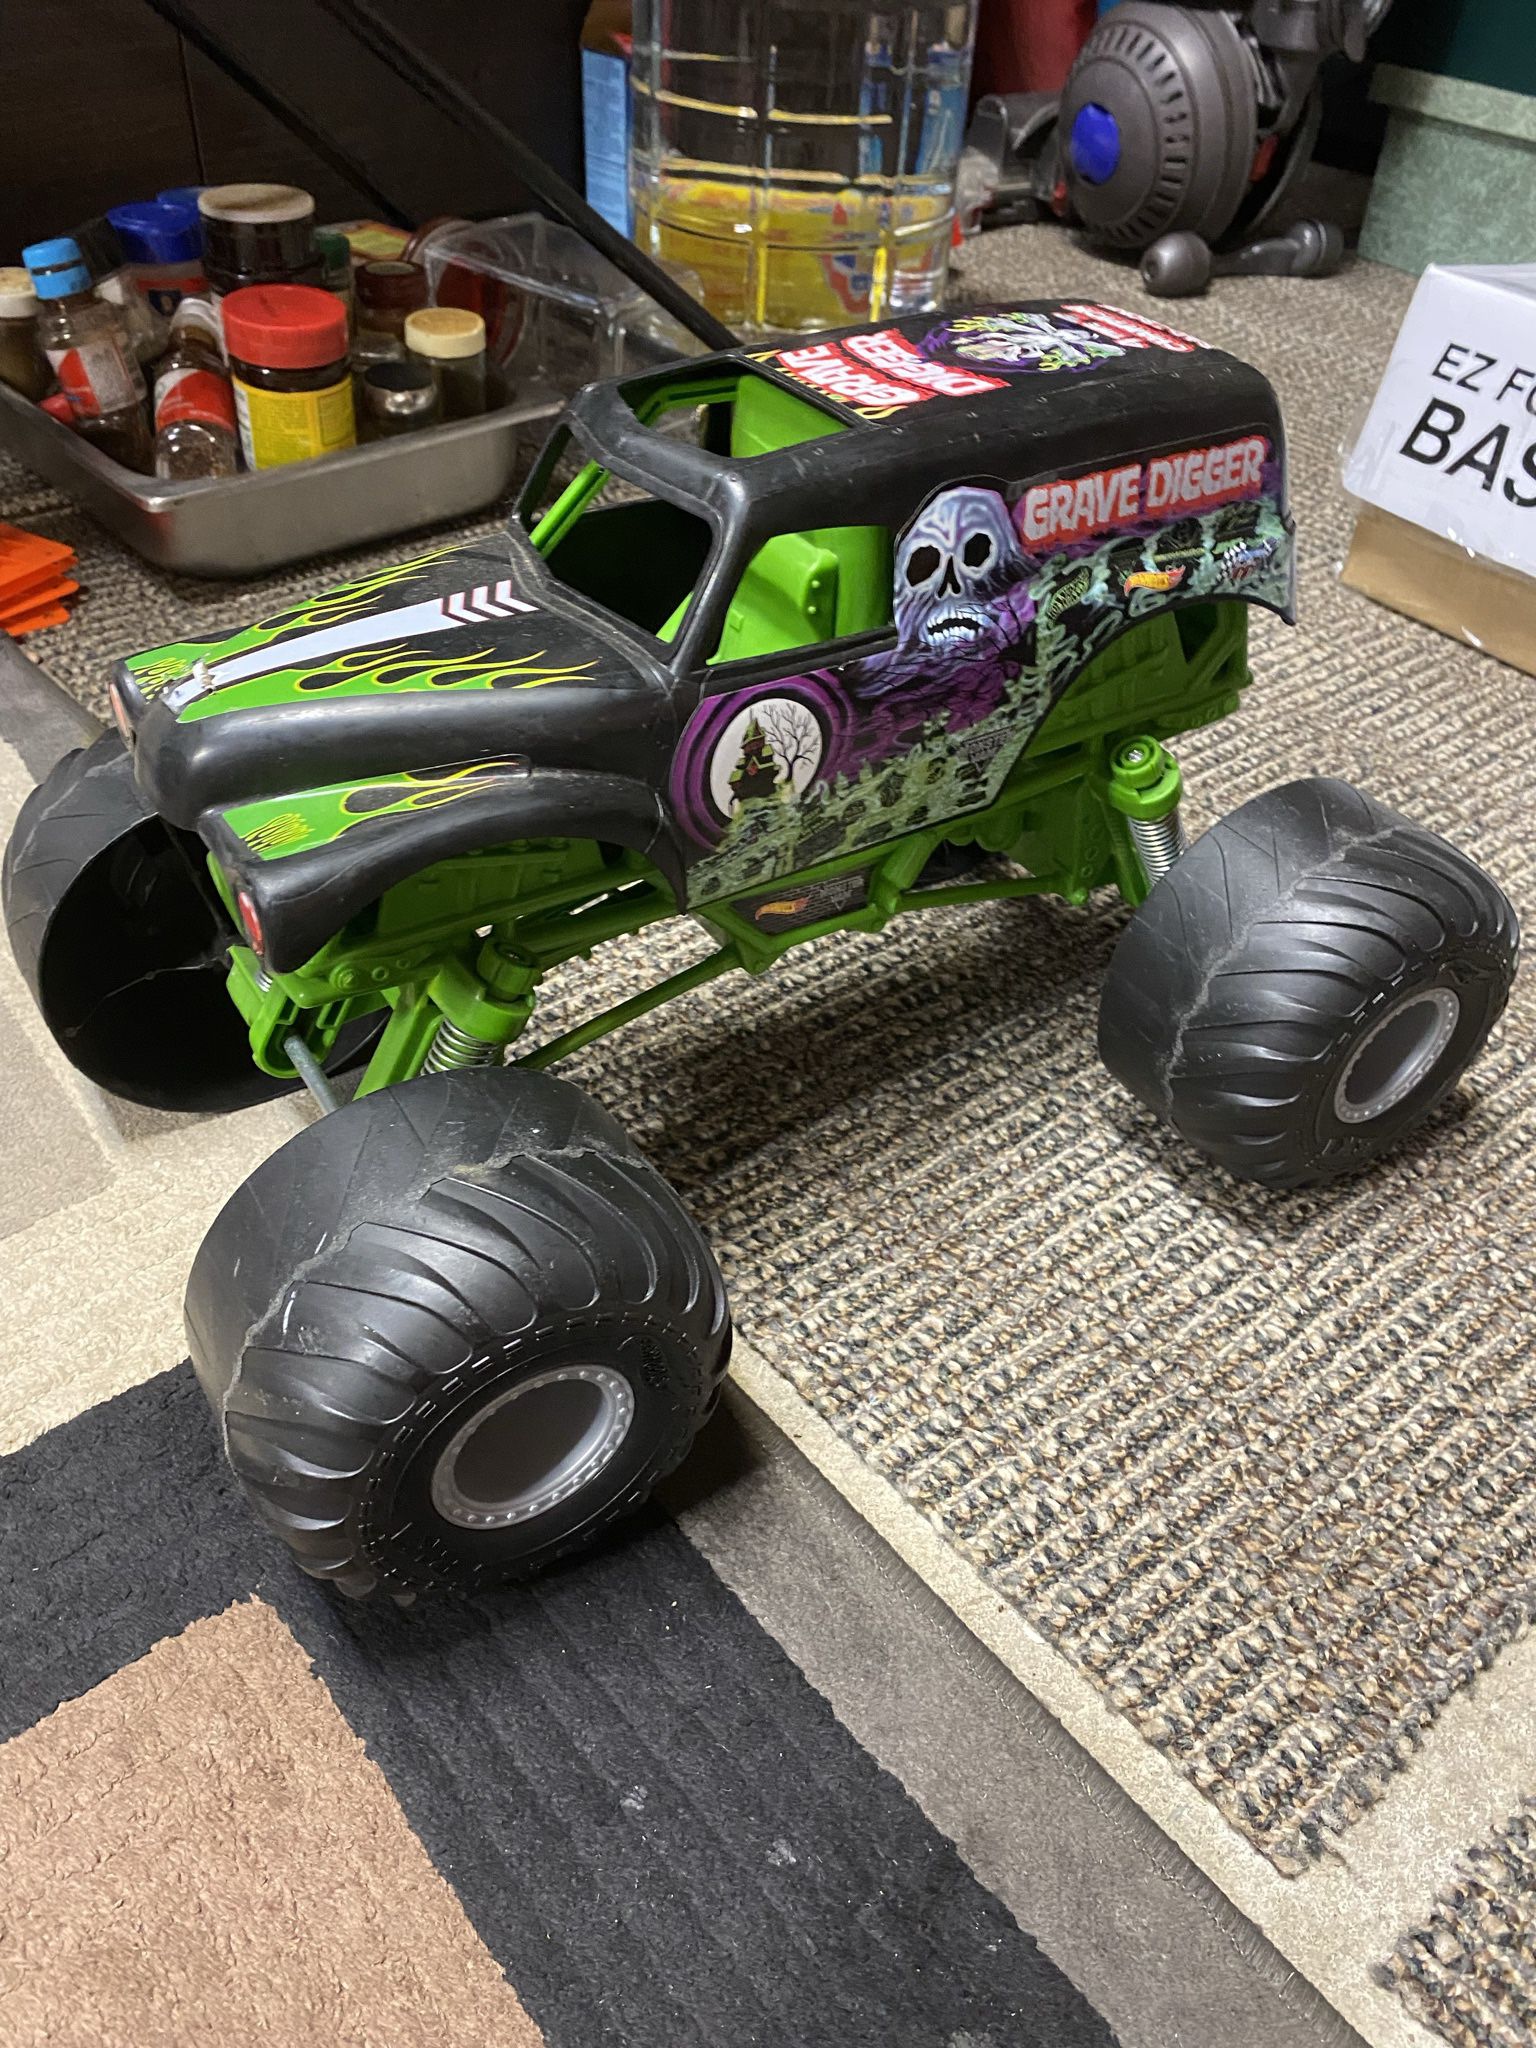 Big Gravedigger Monster Truck 